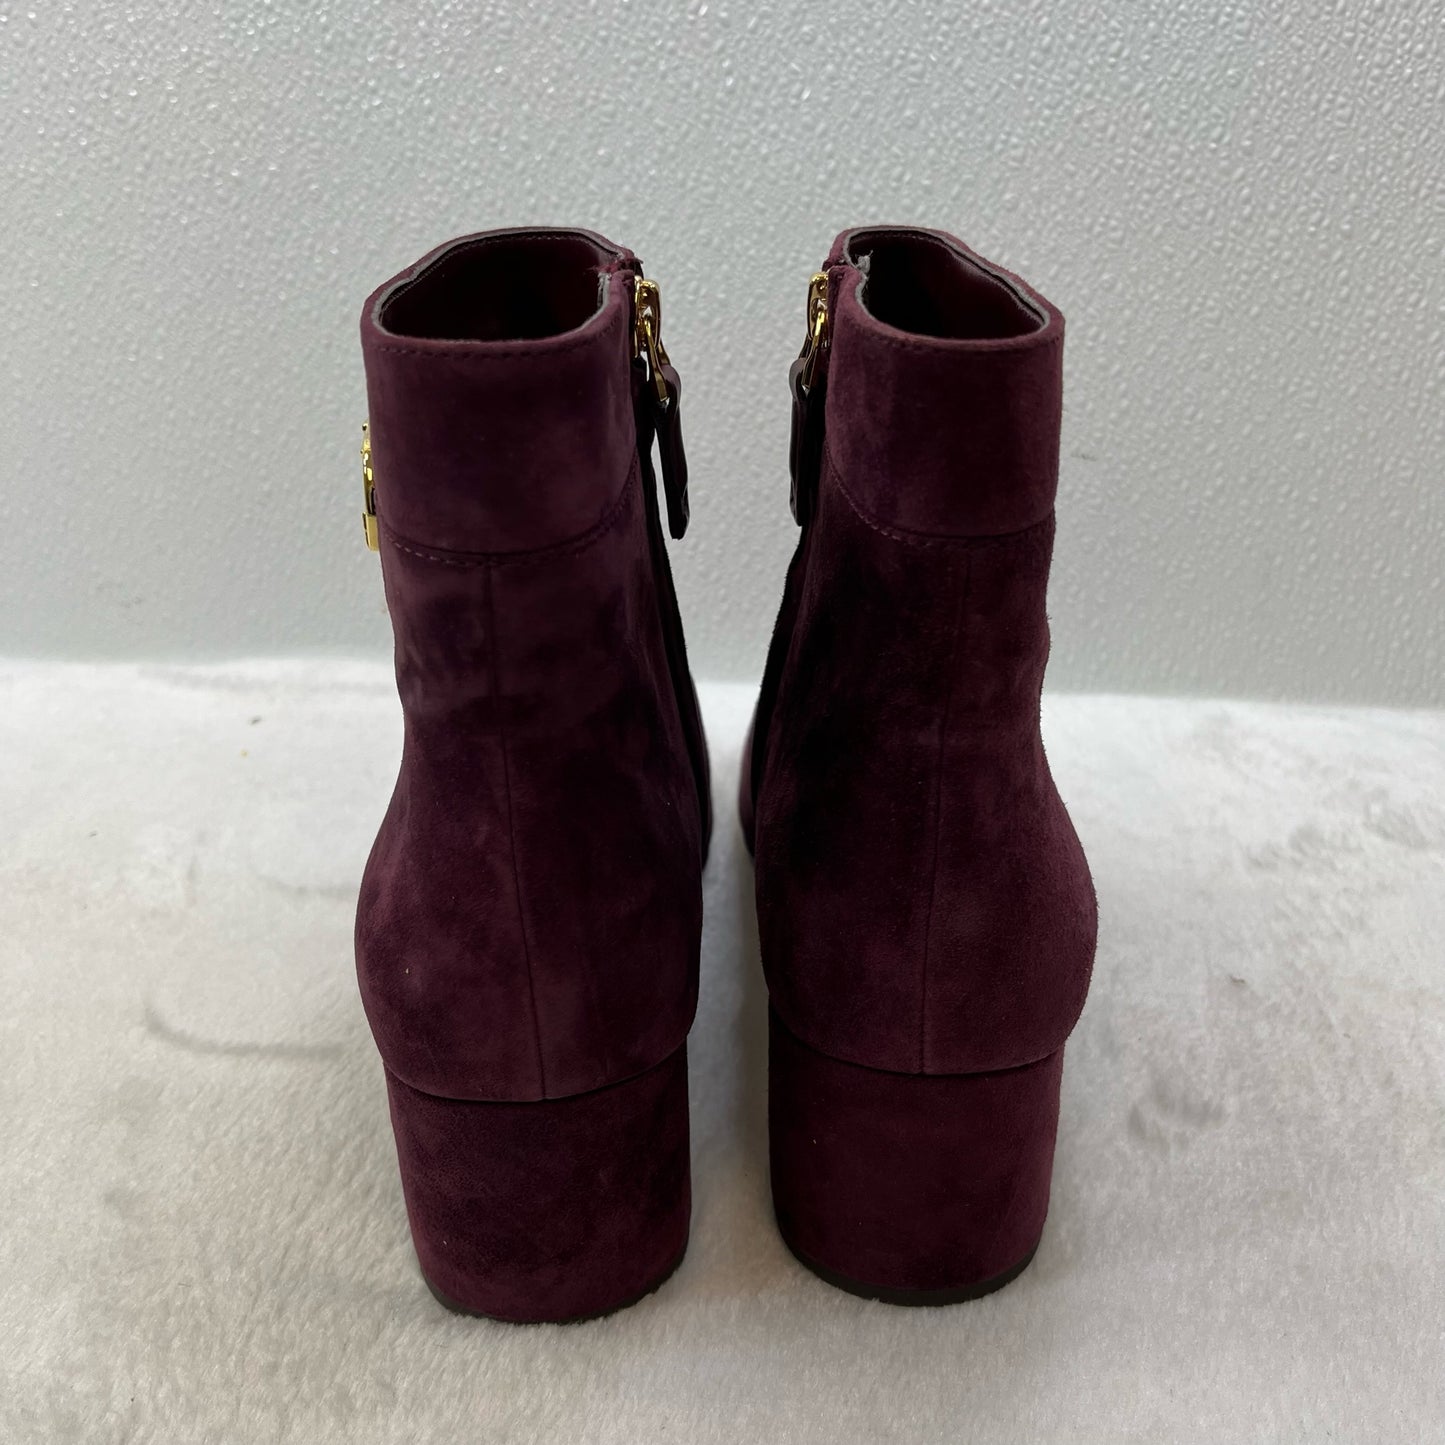 Boots Ankle Heels By Lauren By Ralph Lauren  Size: 8.5